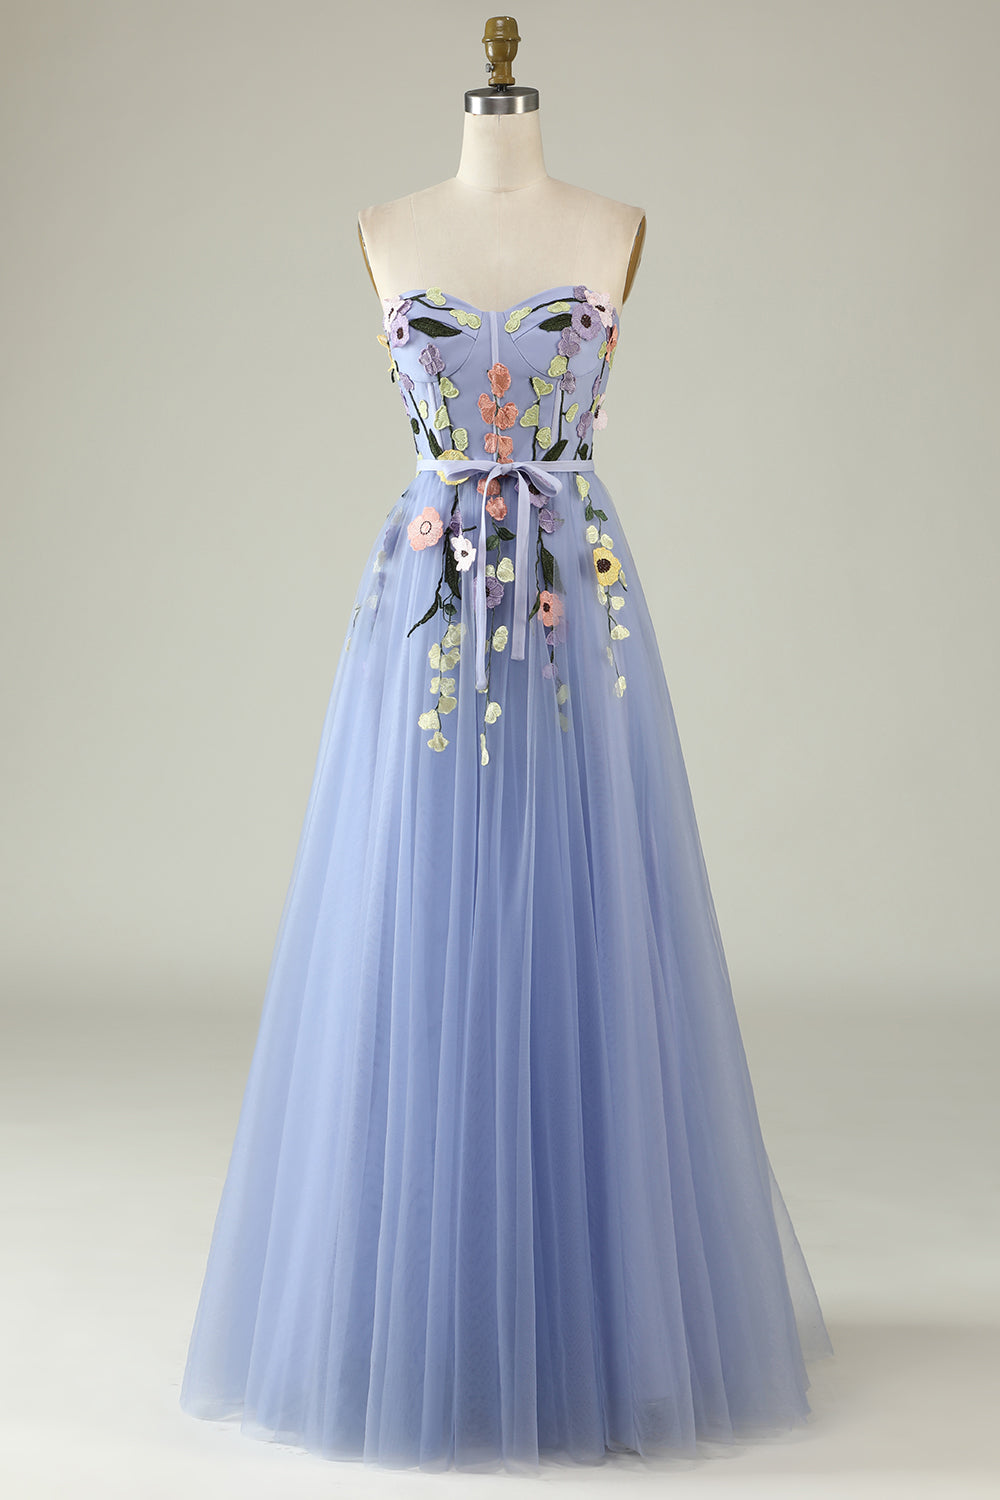 Lavender A Line Strapless Princess Prom Dress with Appliques